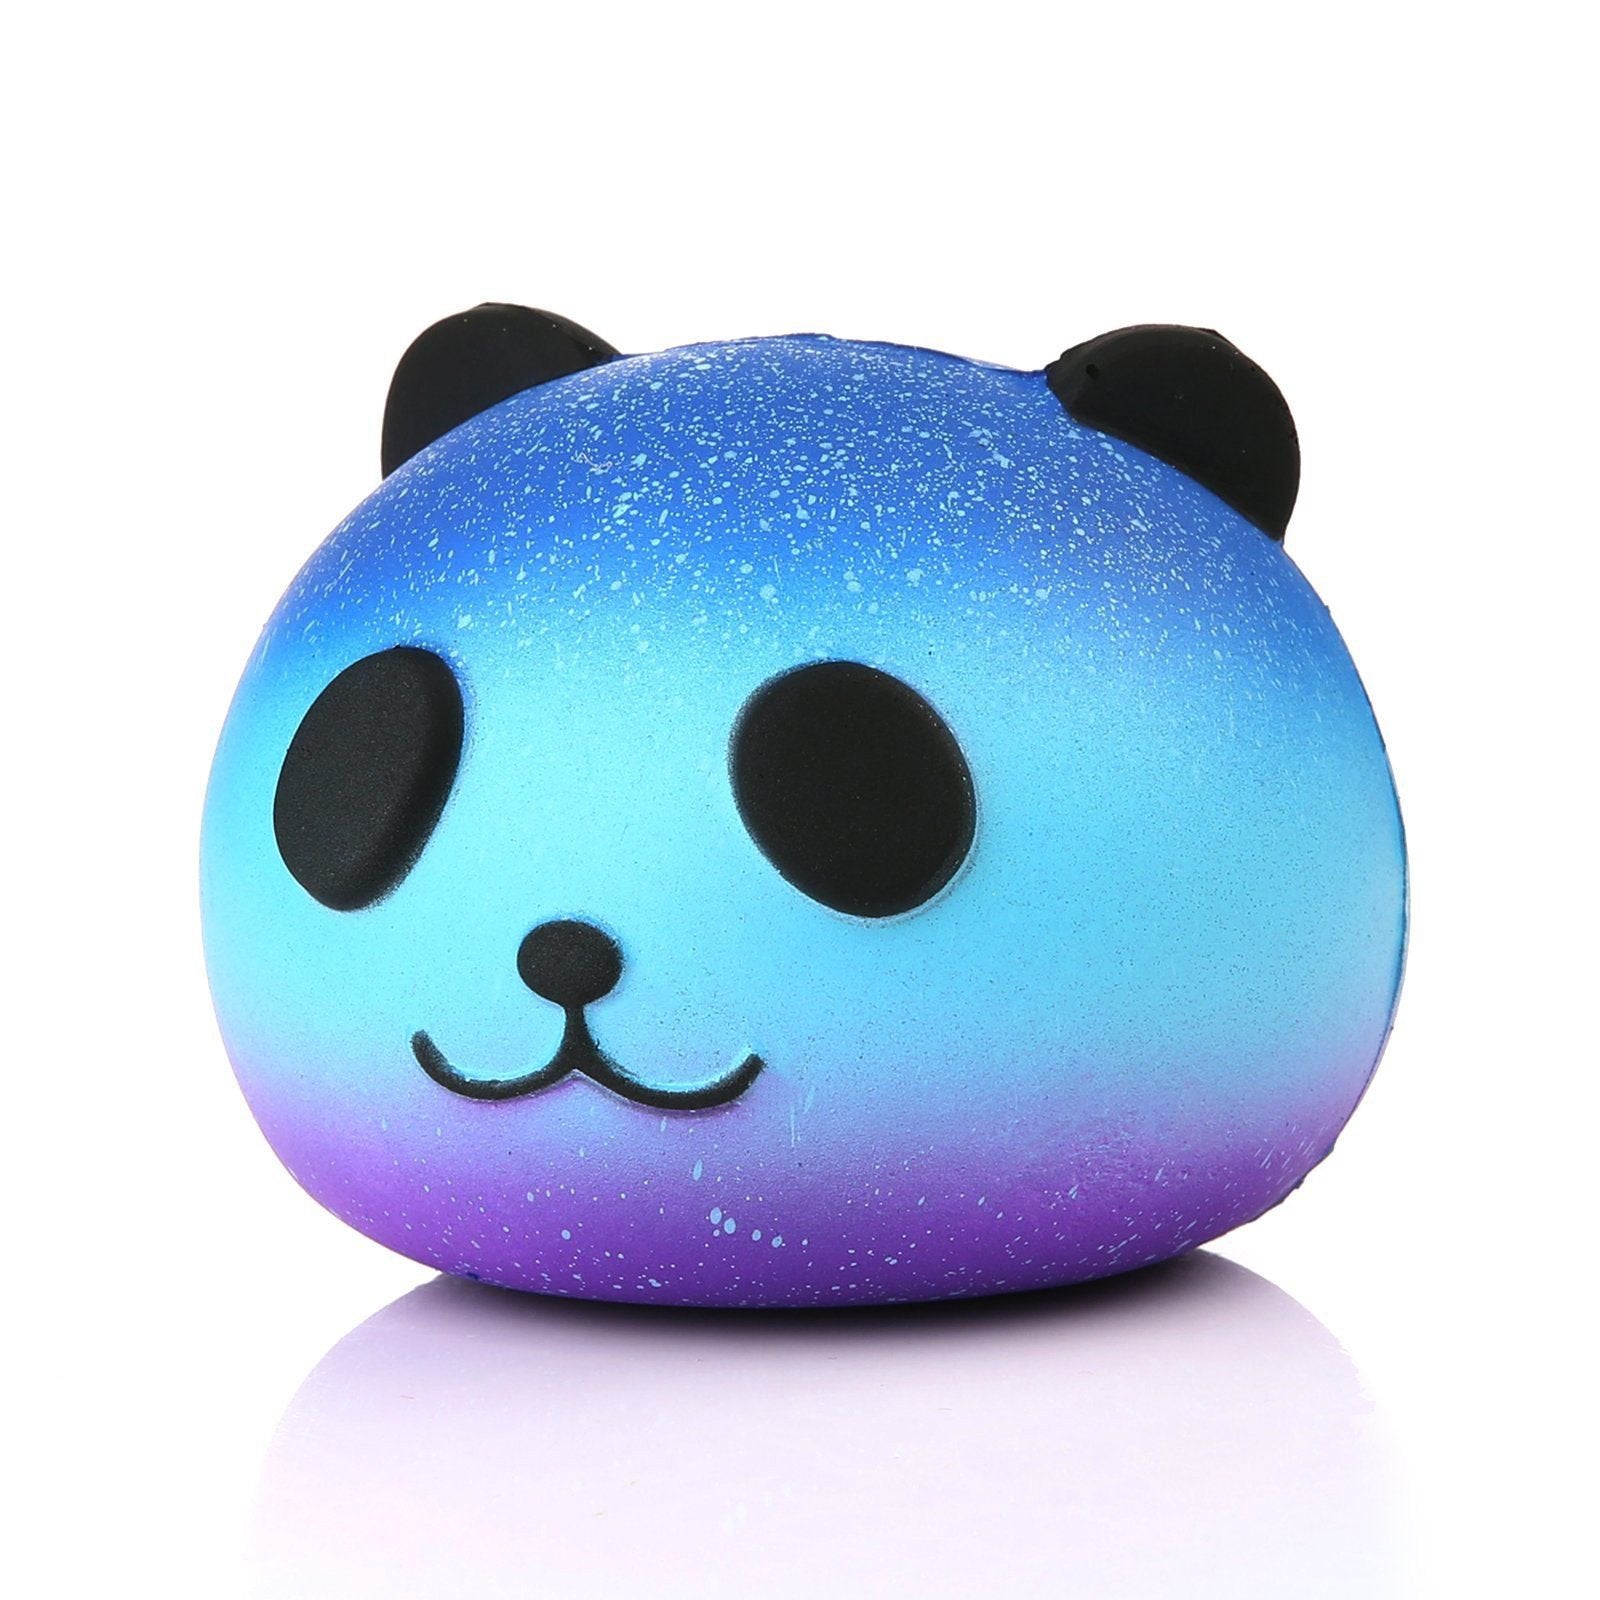 Kawaii Galaxy Panda Squishy